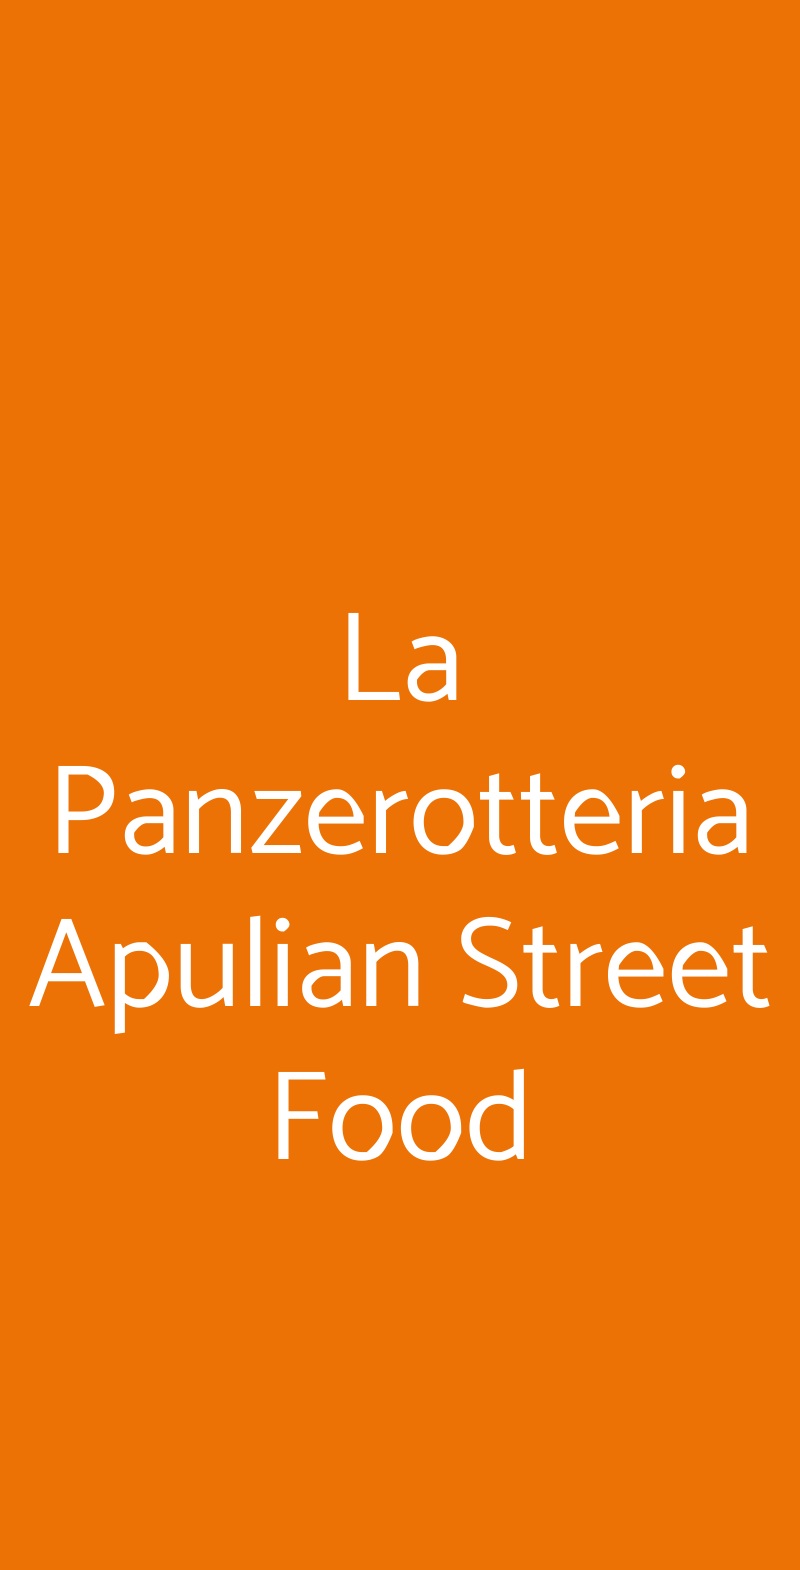 La Panzerotteria Apulian Street Food Torino menù 1 pagina